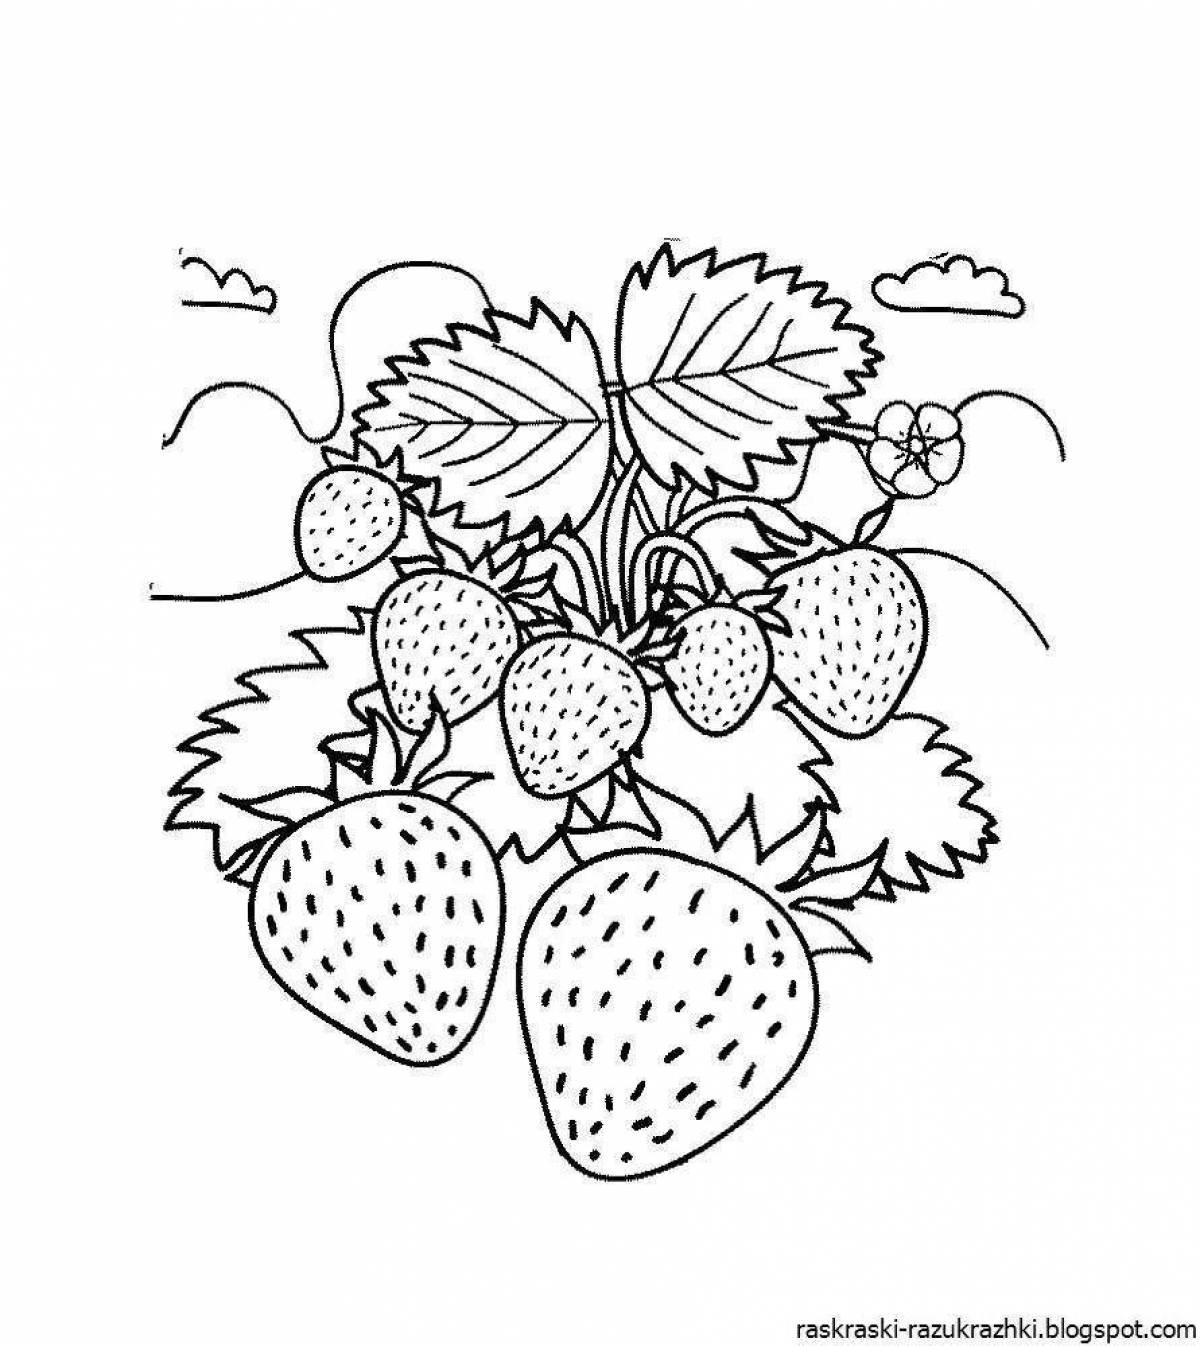 Glorious berries coloring book for kids